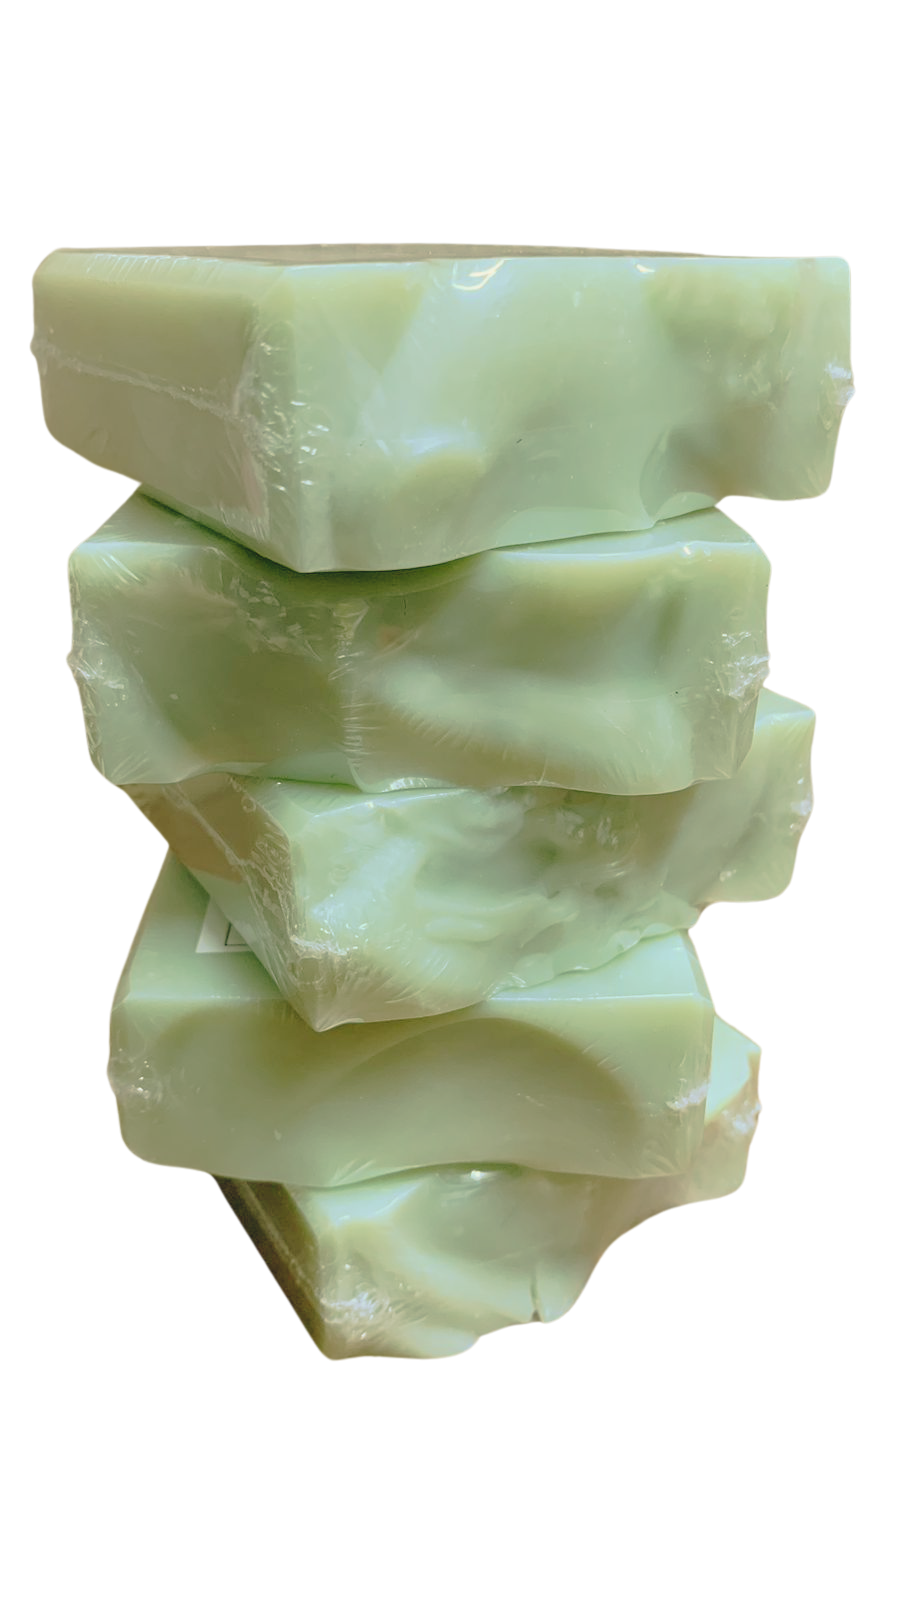 Cucumber Slice Soap Bar